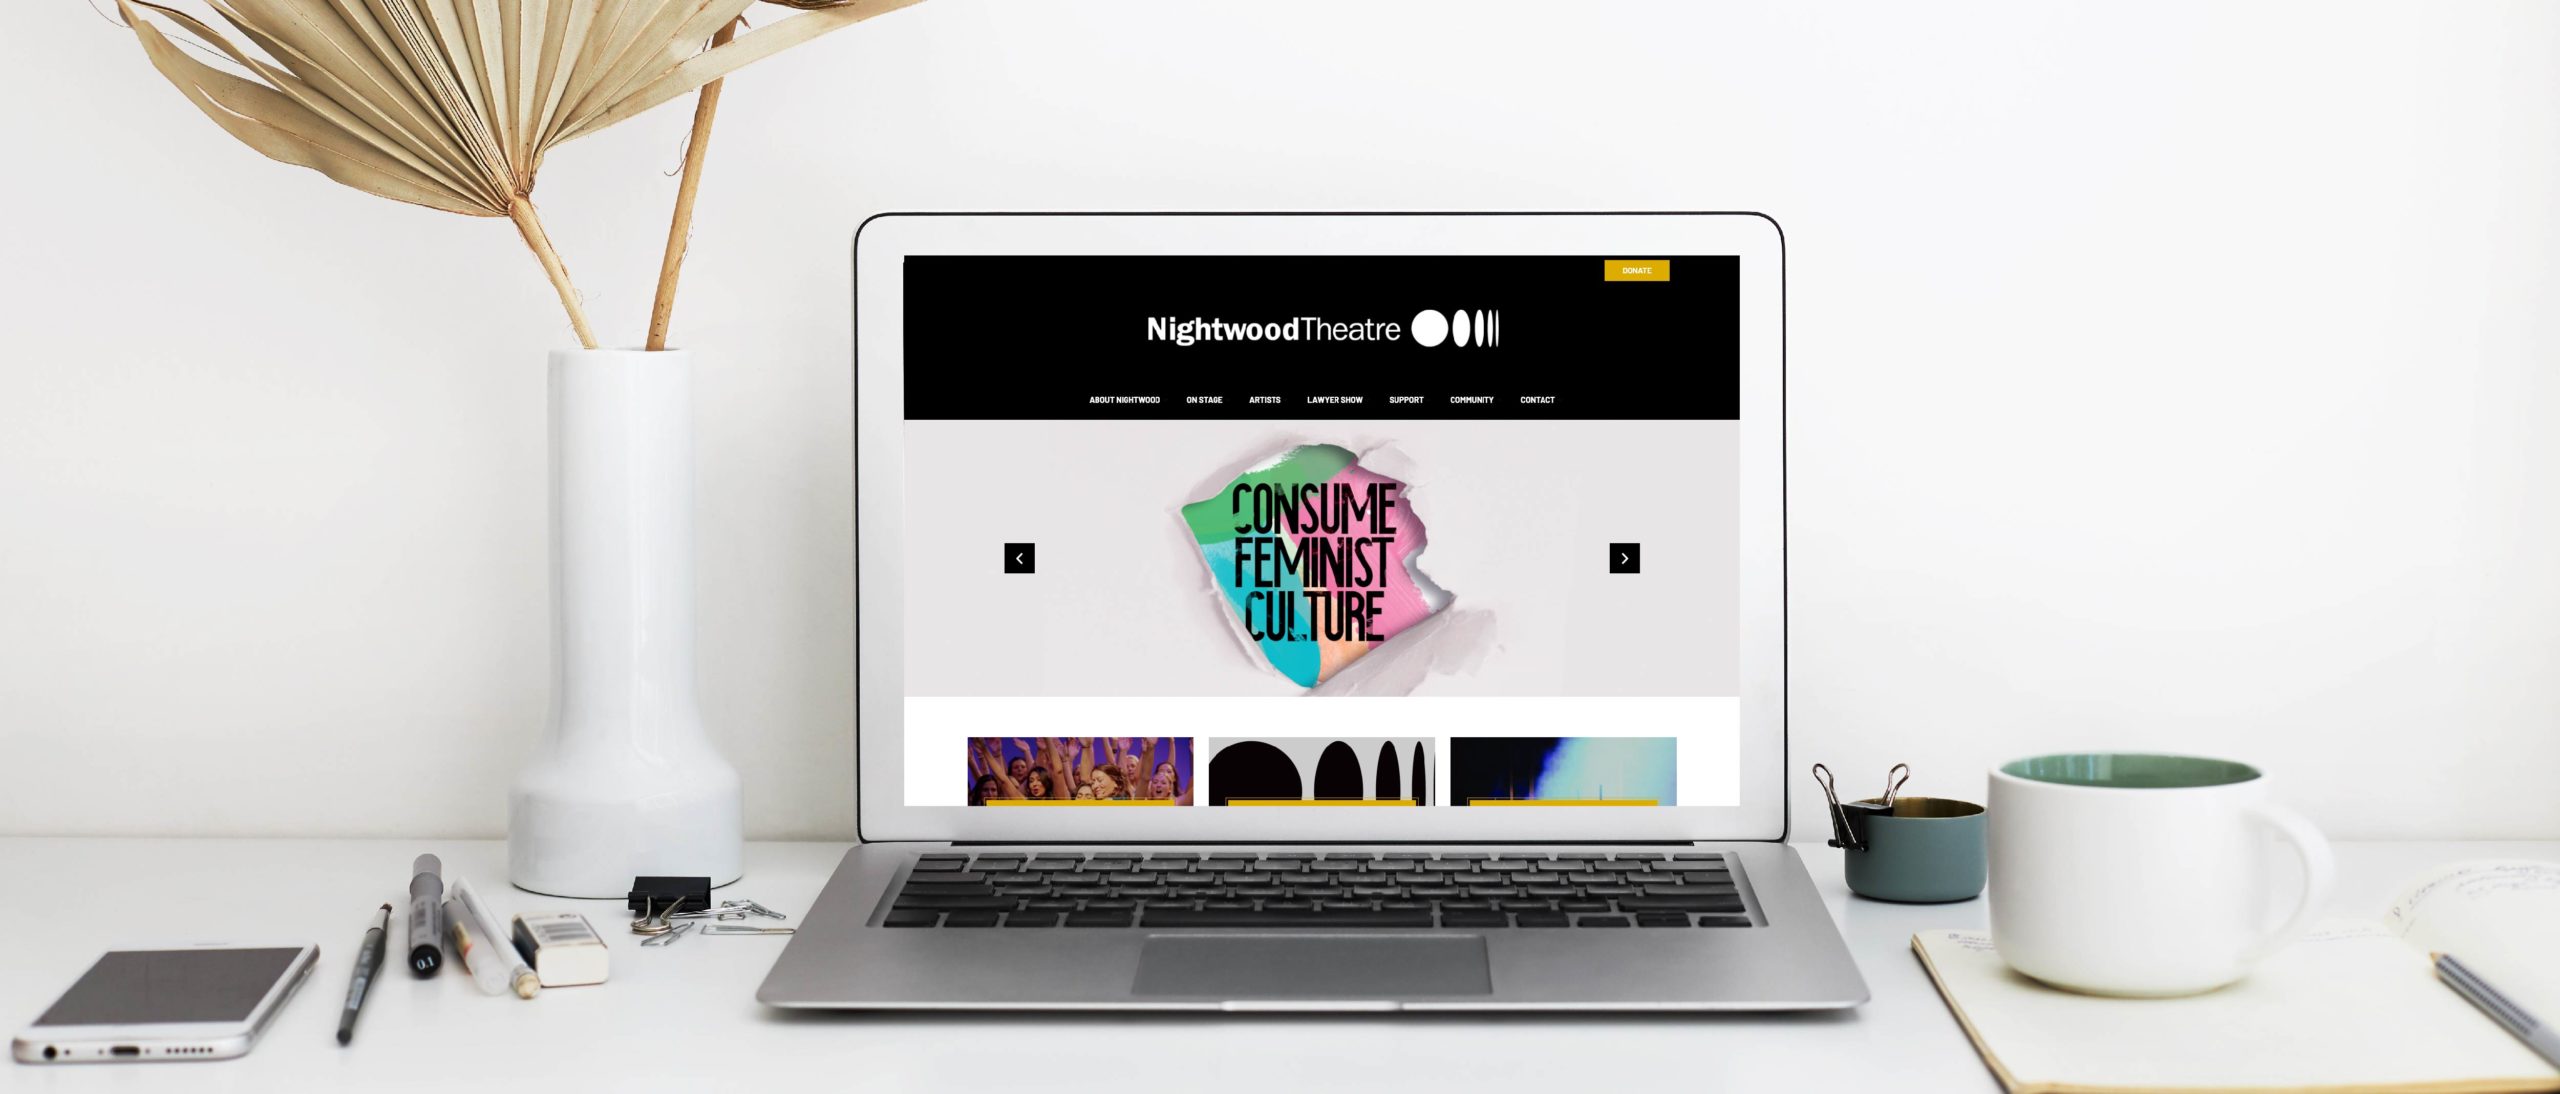 Nightwood Theatre website on laptop